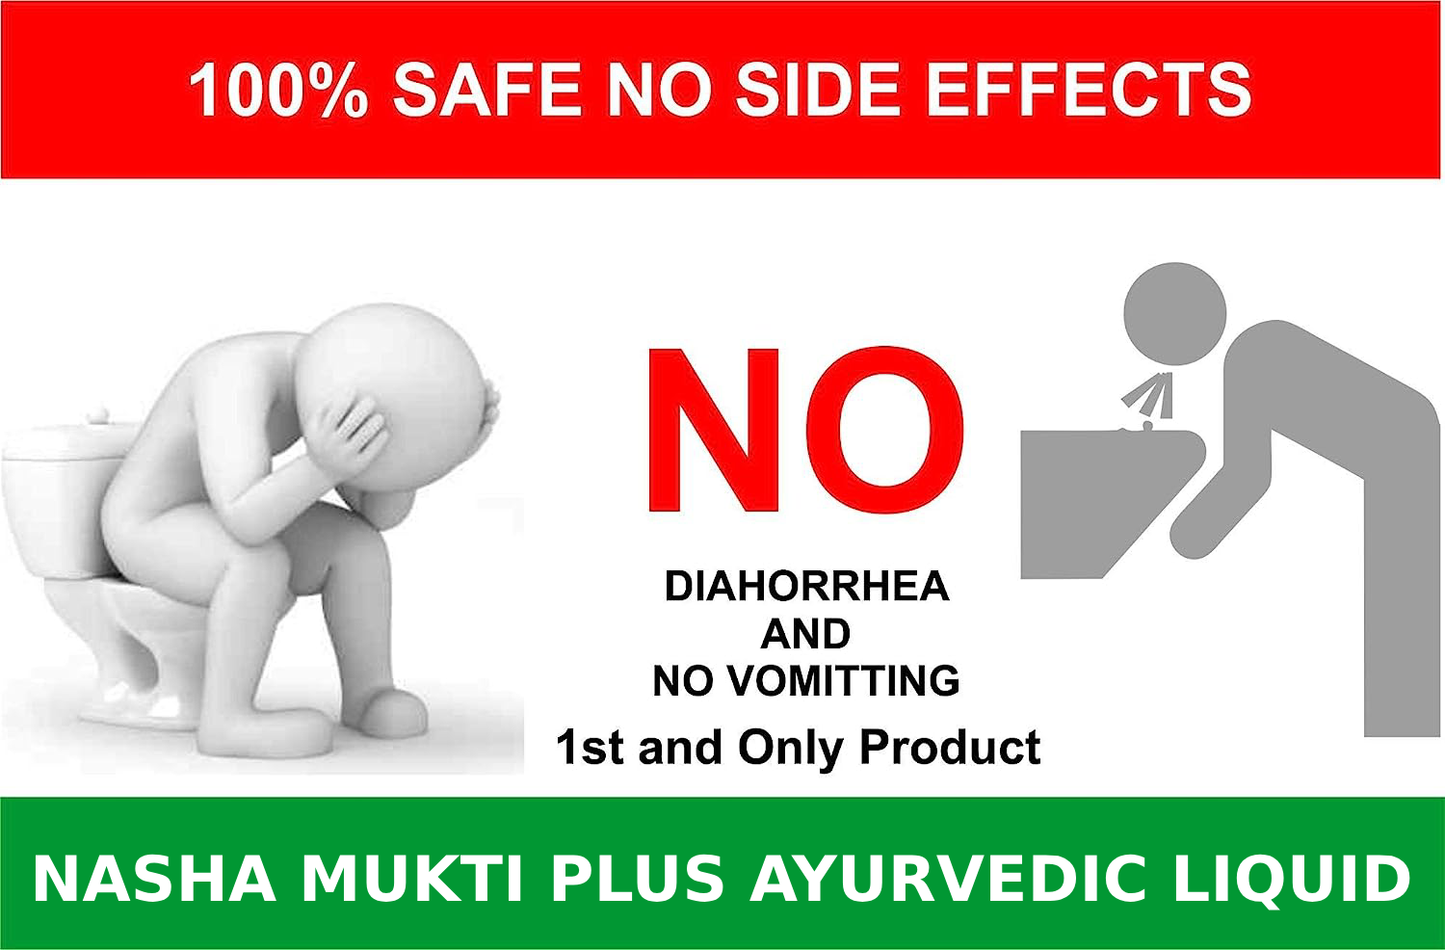 
                  
                    Divya Shri Nasha Mukti Plus drop| 100% Ayurvedic and Effective | Guranteed Result | No-Side Effects (Balanced Combination of Natural Herbs)
                  
                